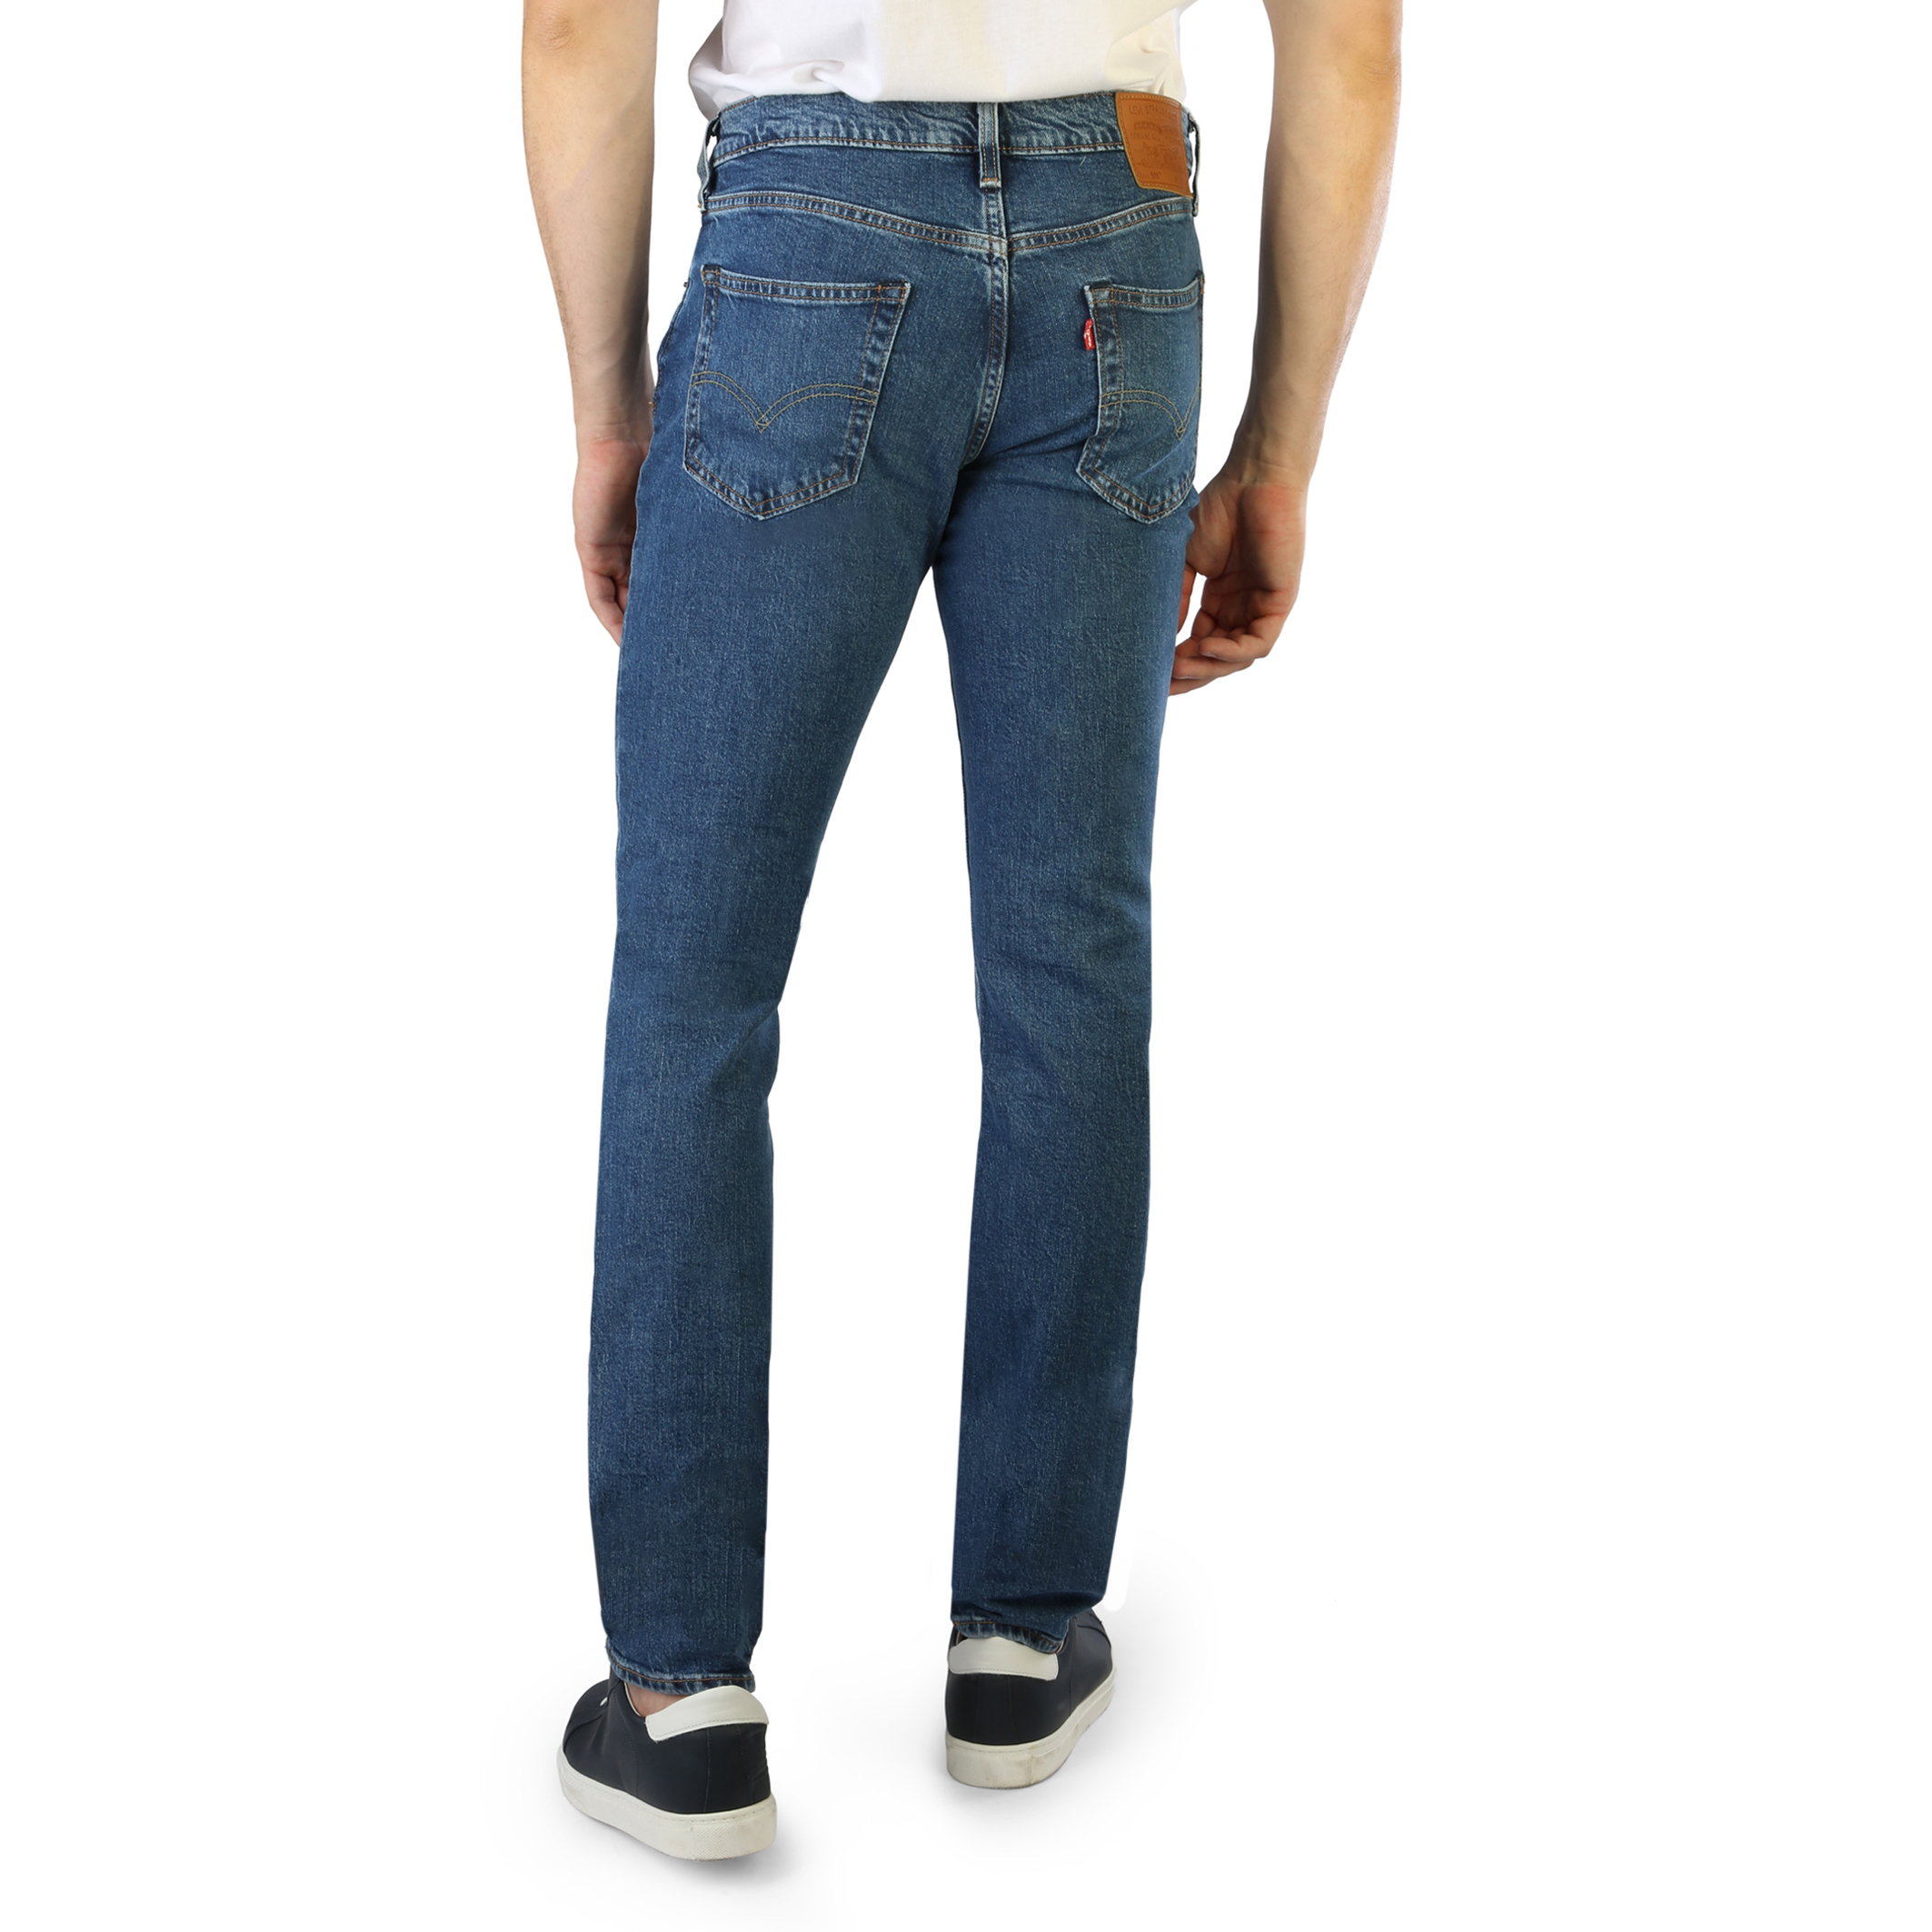 Levi's Blue Jeans for Men - 511_SLIM